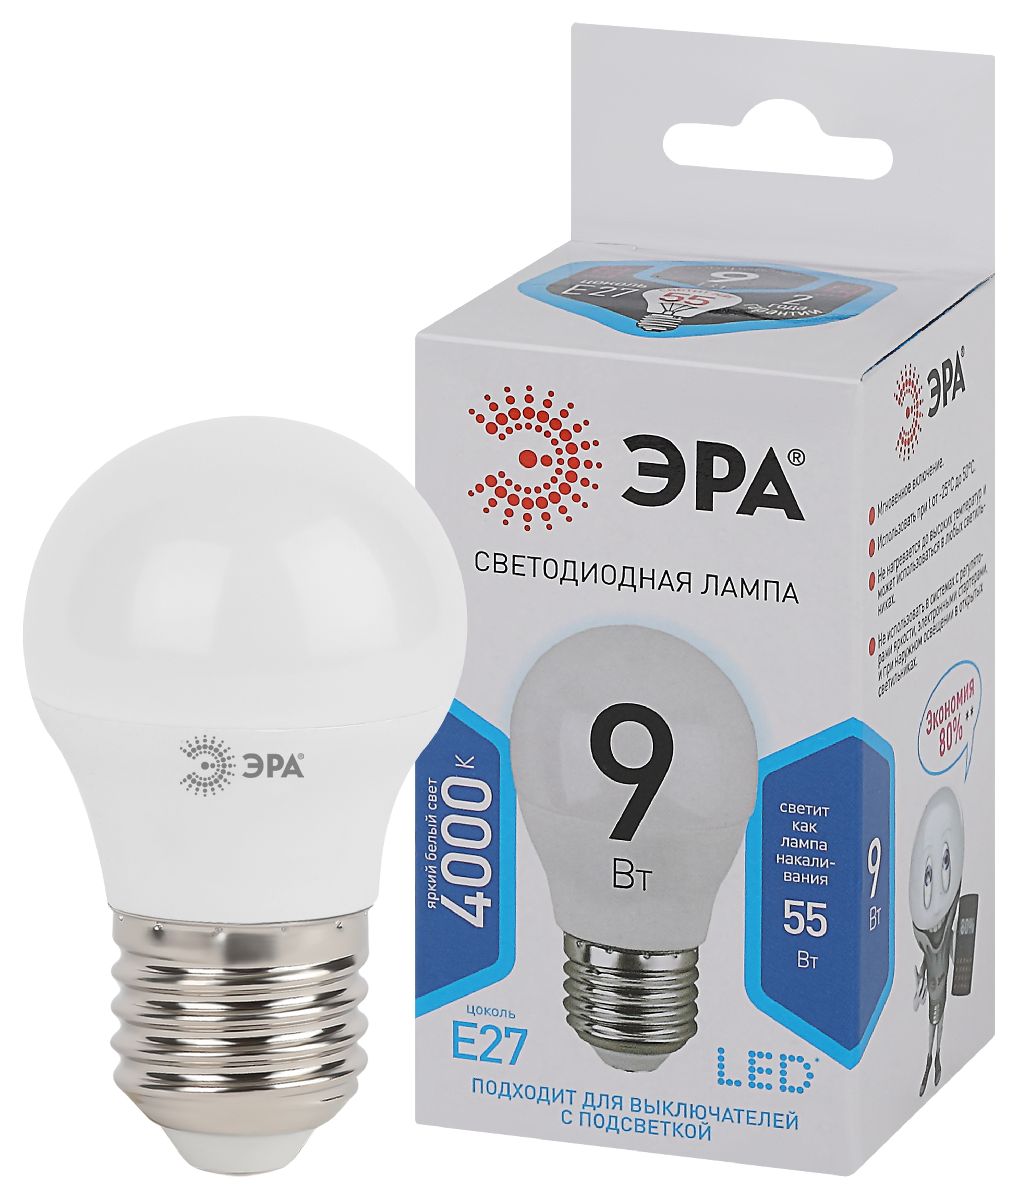 Лампа светодиодная Эра E27 9W 4000K LED P45-9W-840-E27 Б0029044